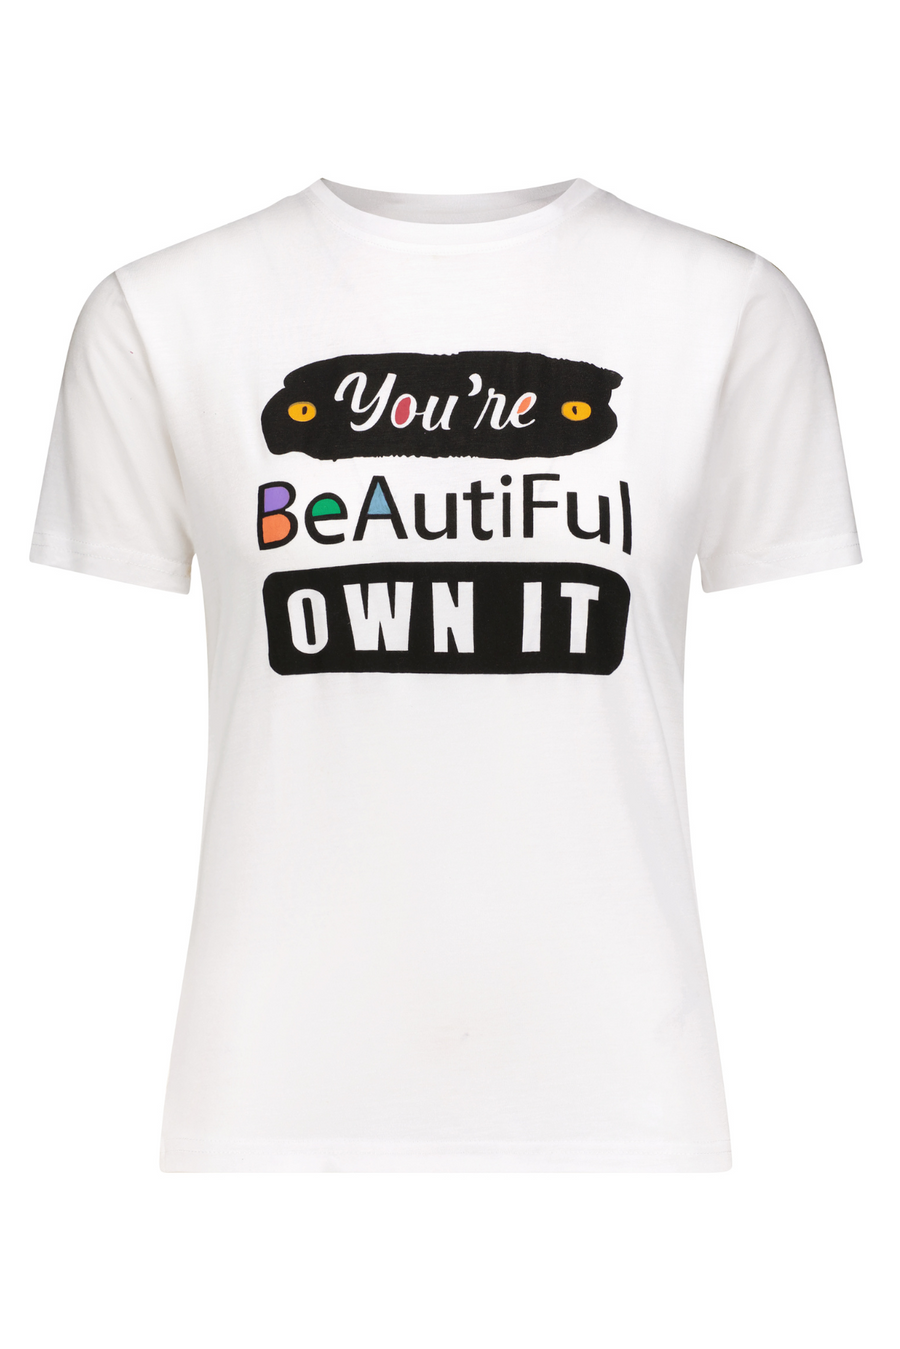 You're Beautiful Own It Cotton T-Shirt II in White - Furkat & Robbie